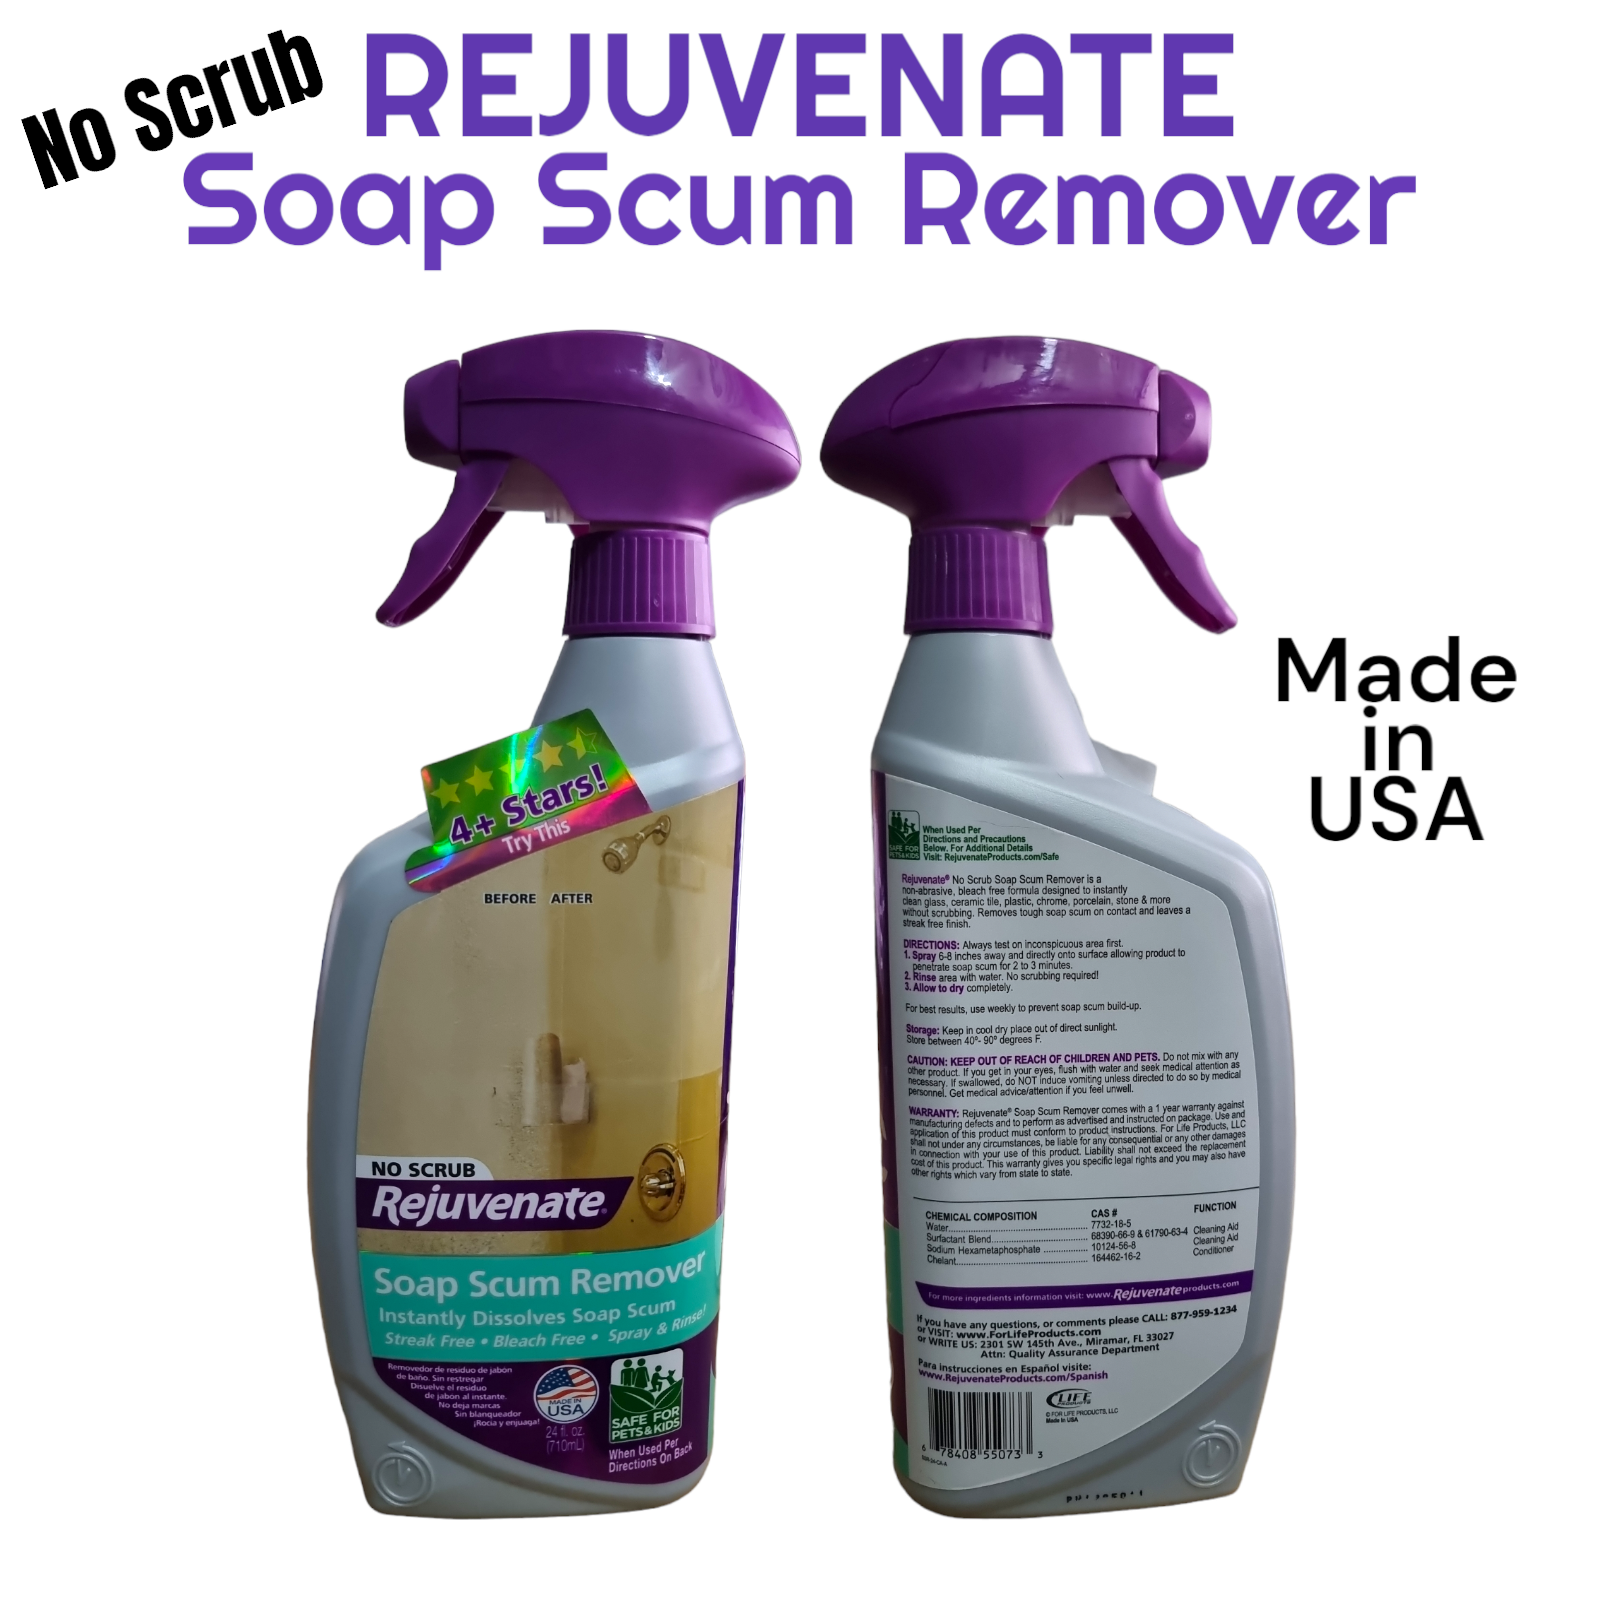 Rejuvenate 24 oz. Soap Scum Remover